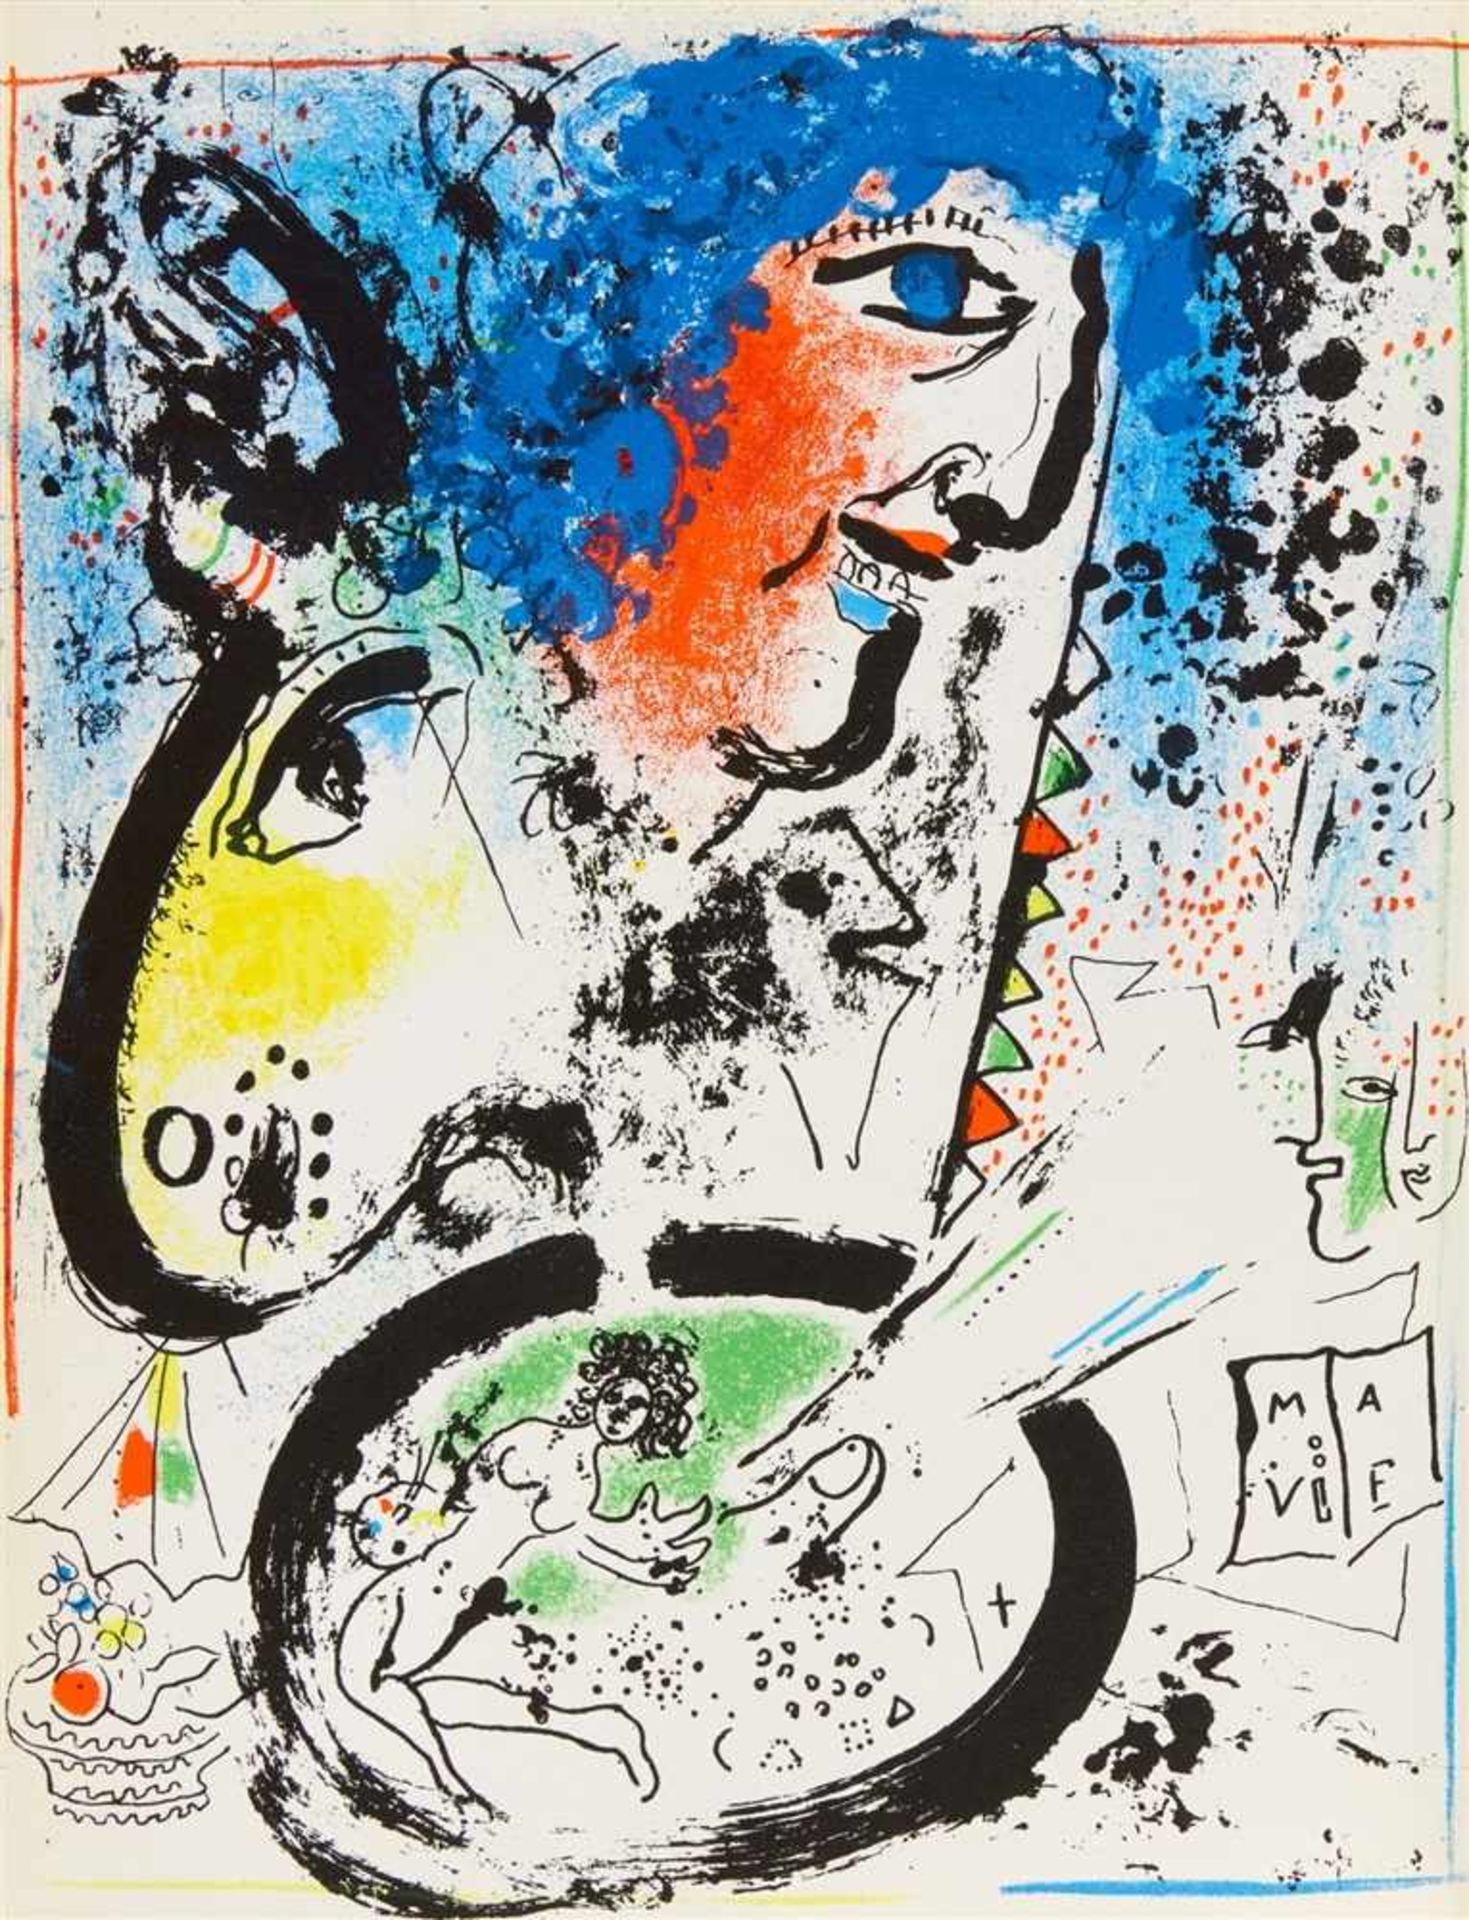 CHAGALL, MARC FERNAND MOURLOT, JUL. CAIN, CH. SORLIER: Chagall Lithograph. Bände I-VI. Monte-